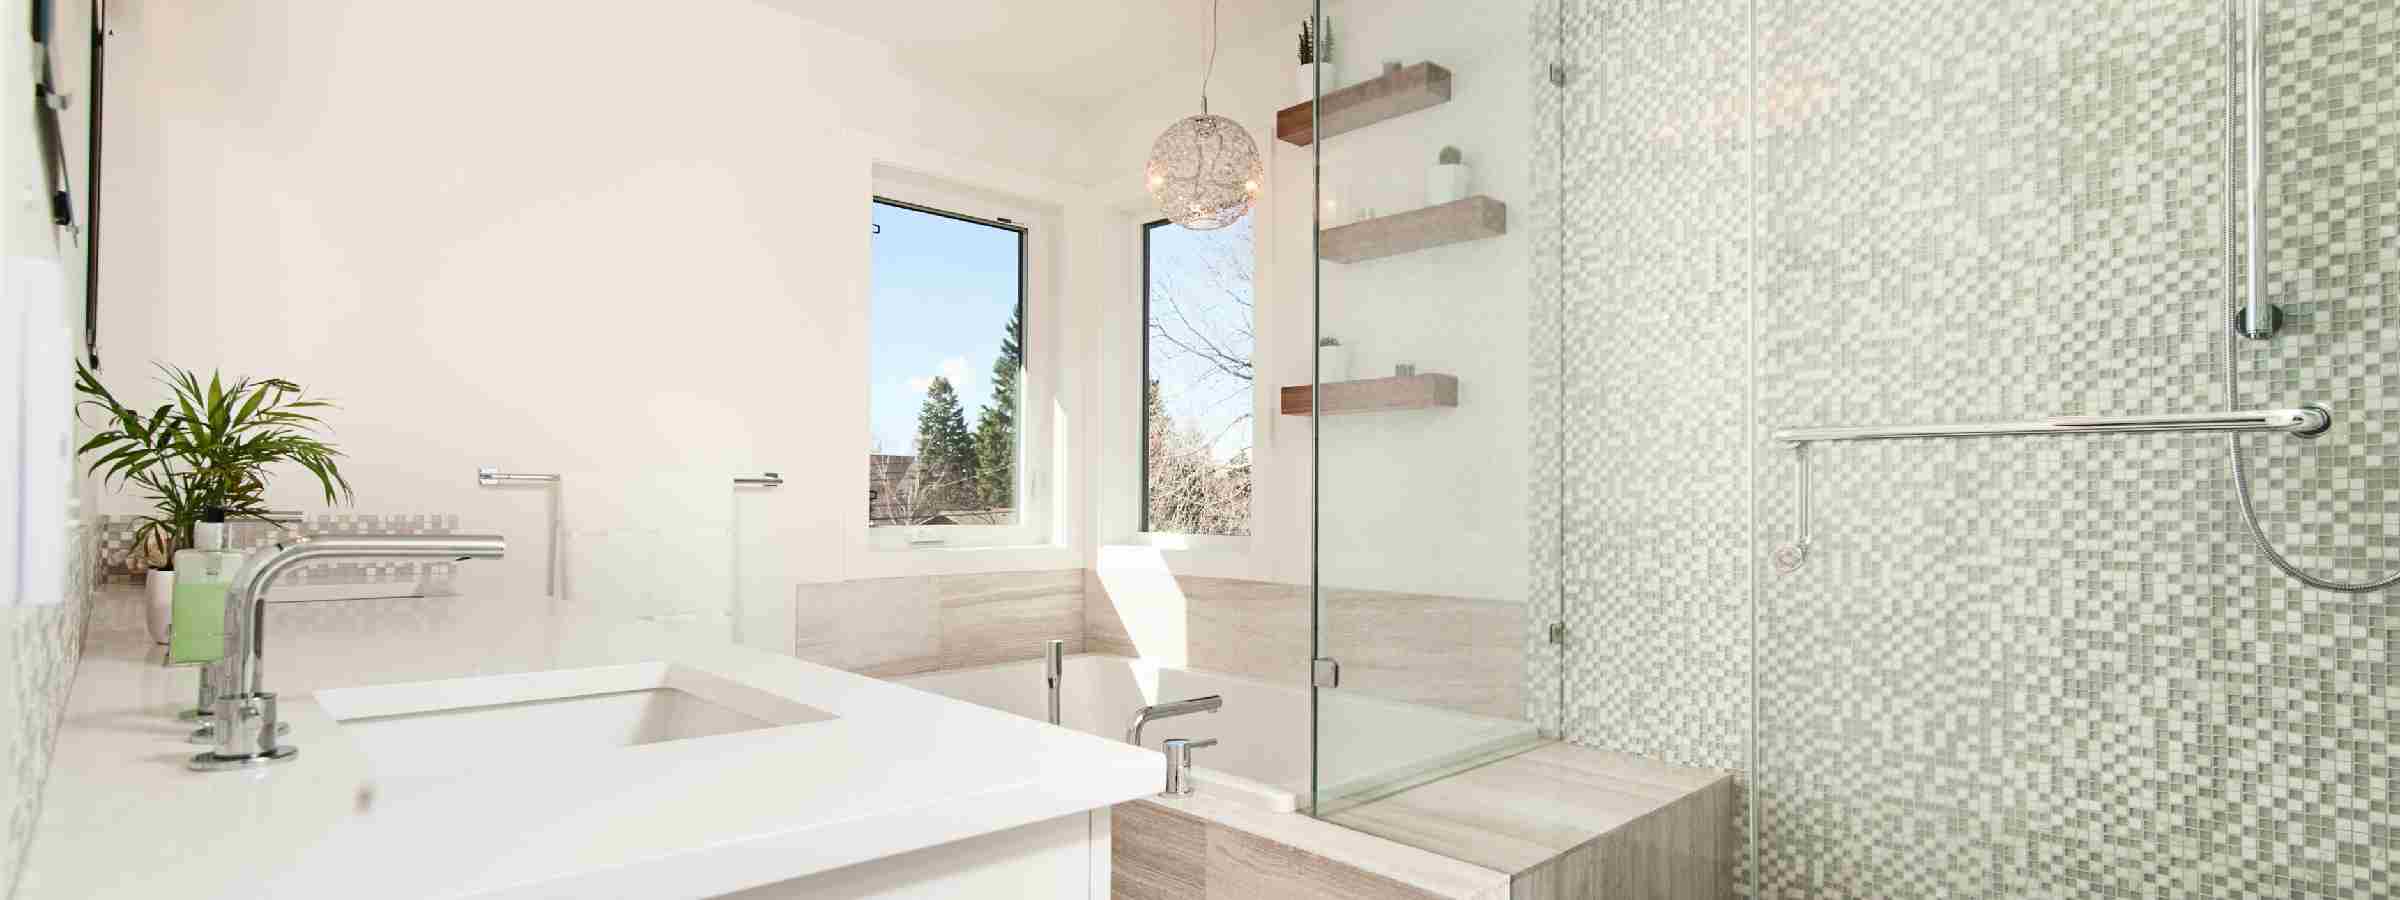 Bespoke bathroom design and installation